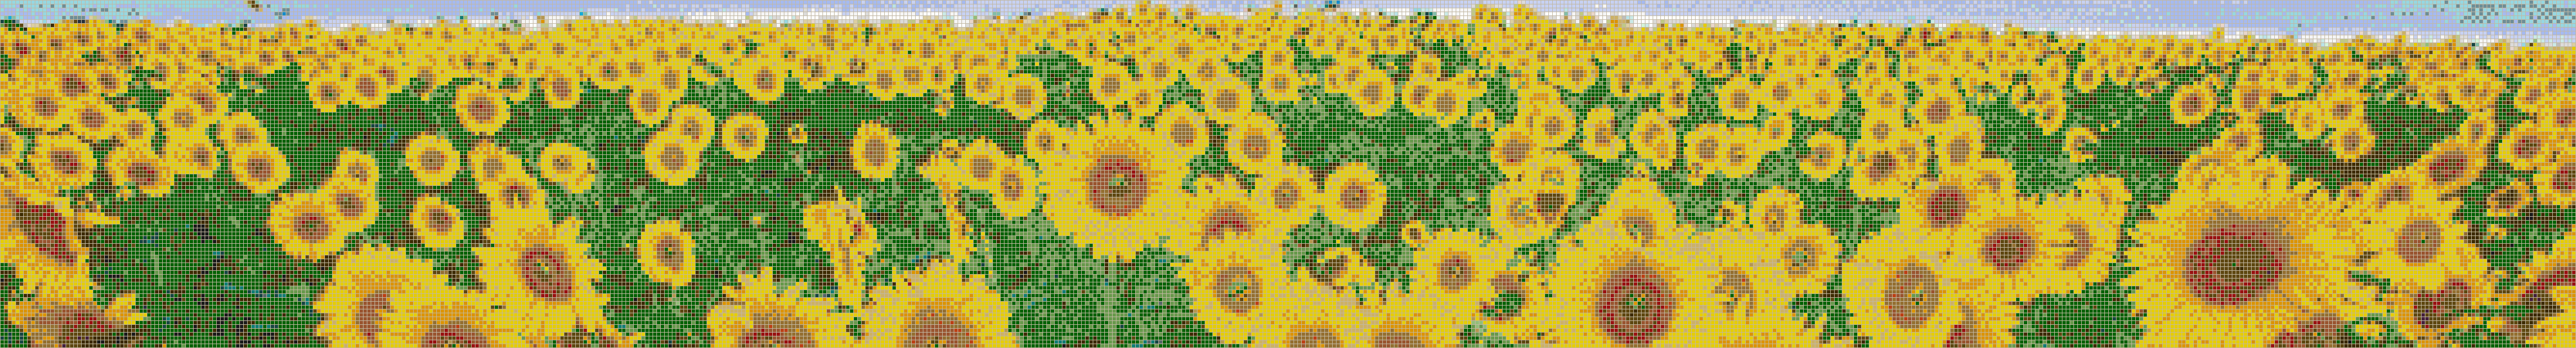 Sunflower Sky - Mosaic Tile Picture Art